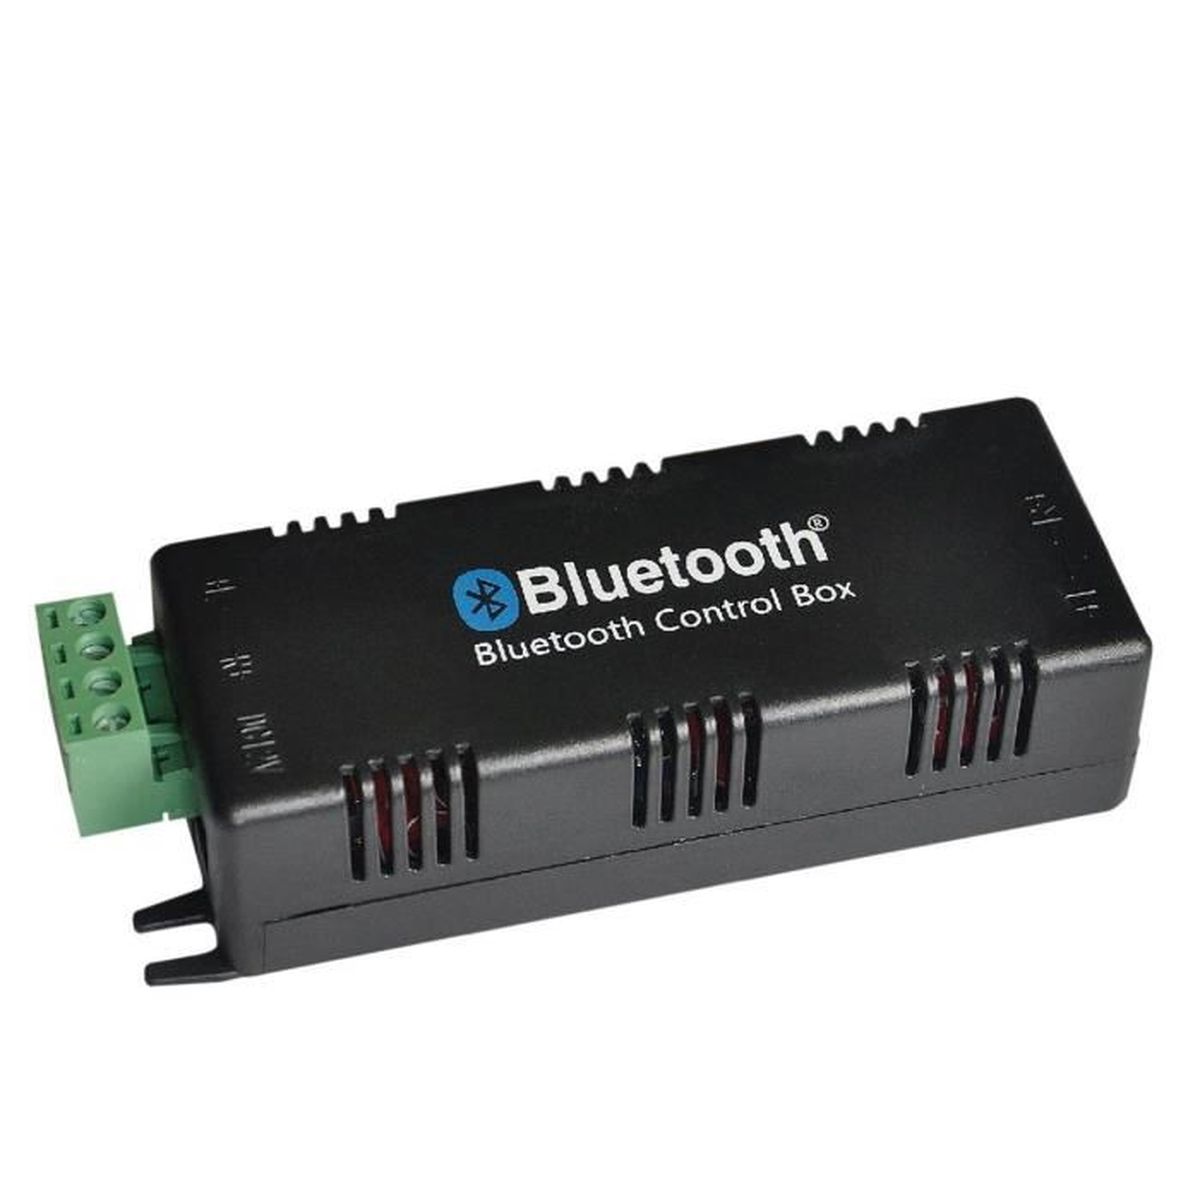 E-audio B403bl 4 Way Bluetooth Haut-parleur de plafond kit